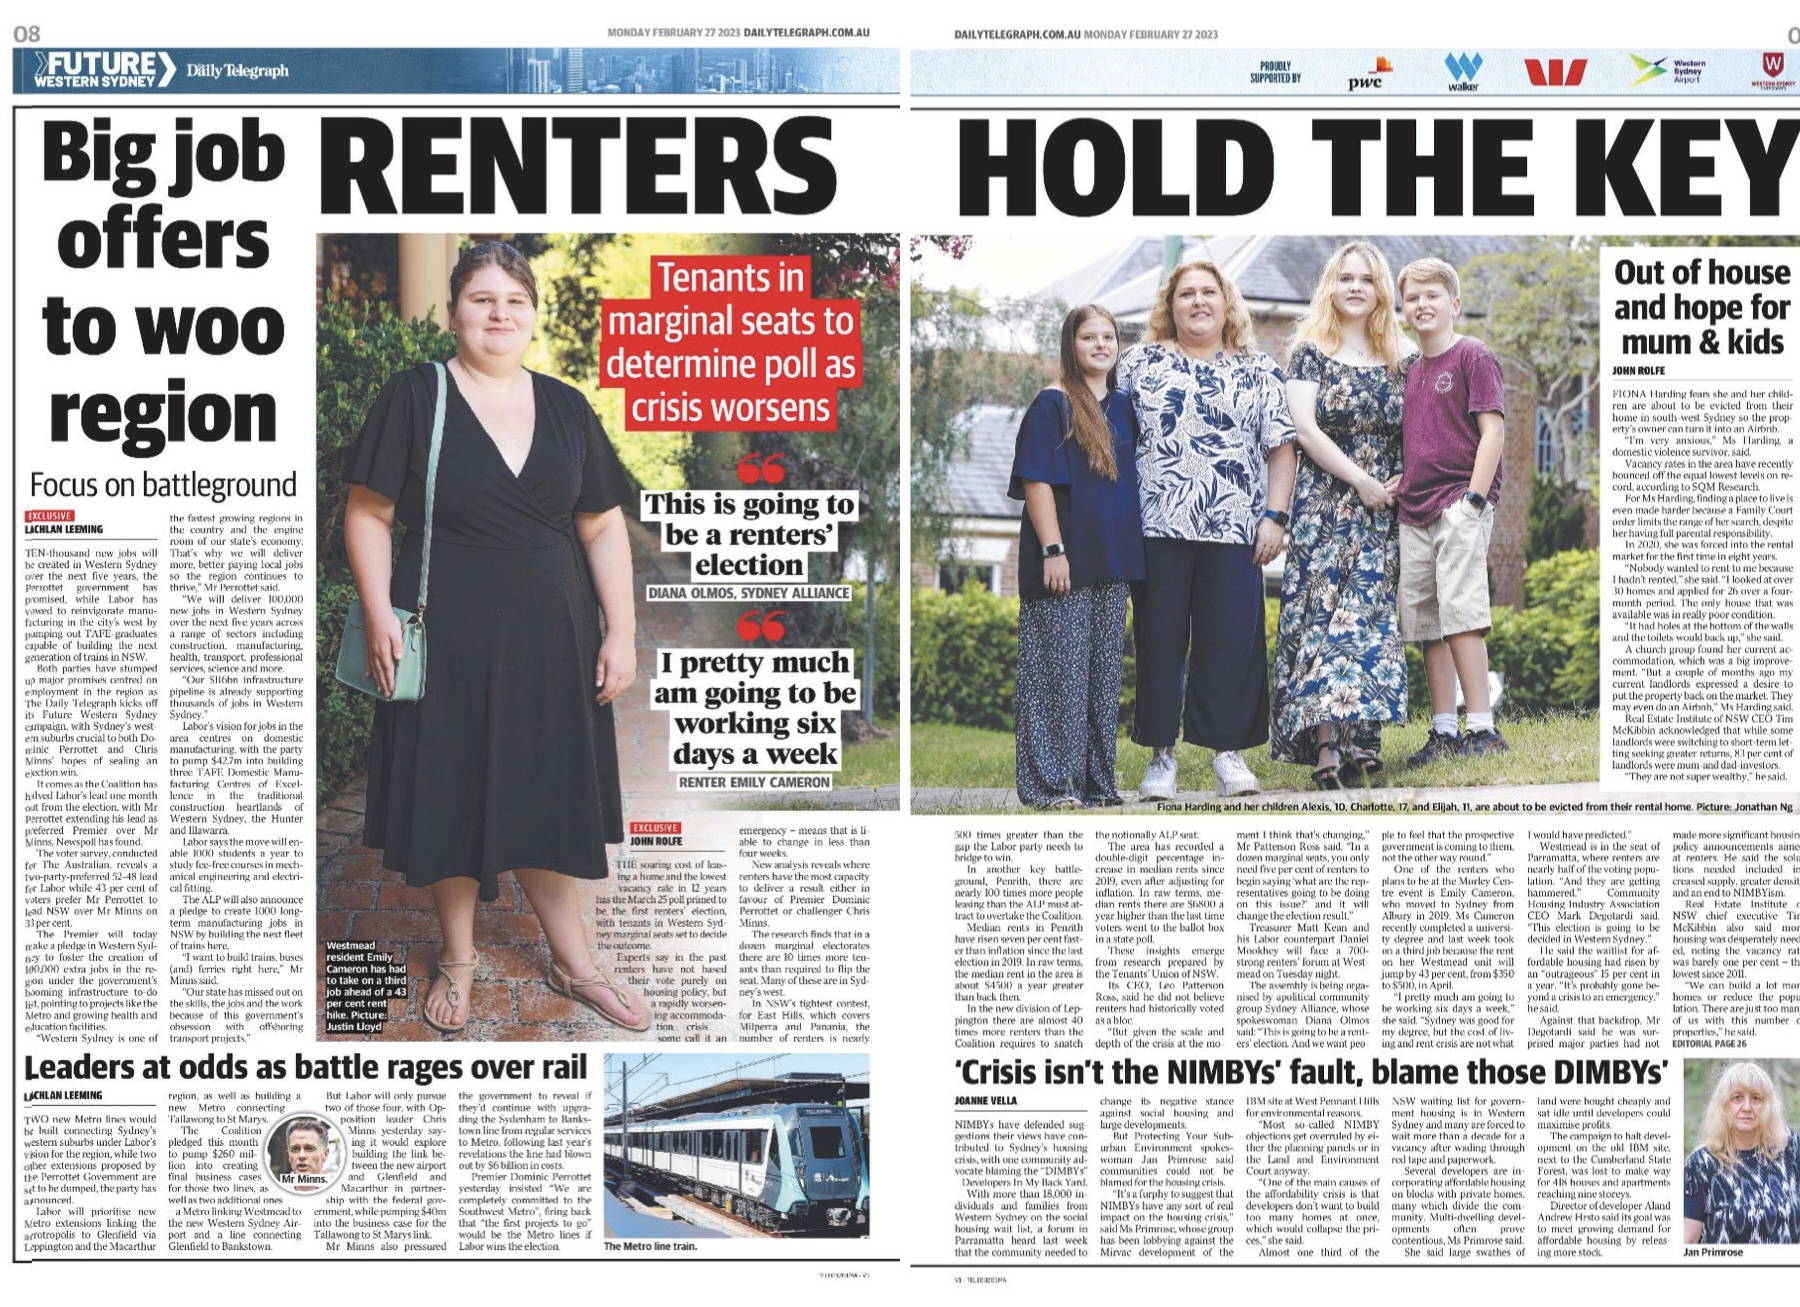 Daily Tele headline: Renters hold the key